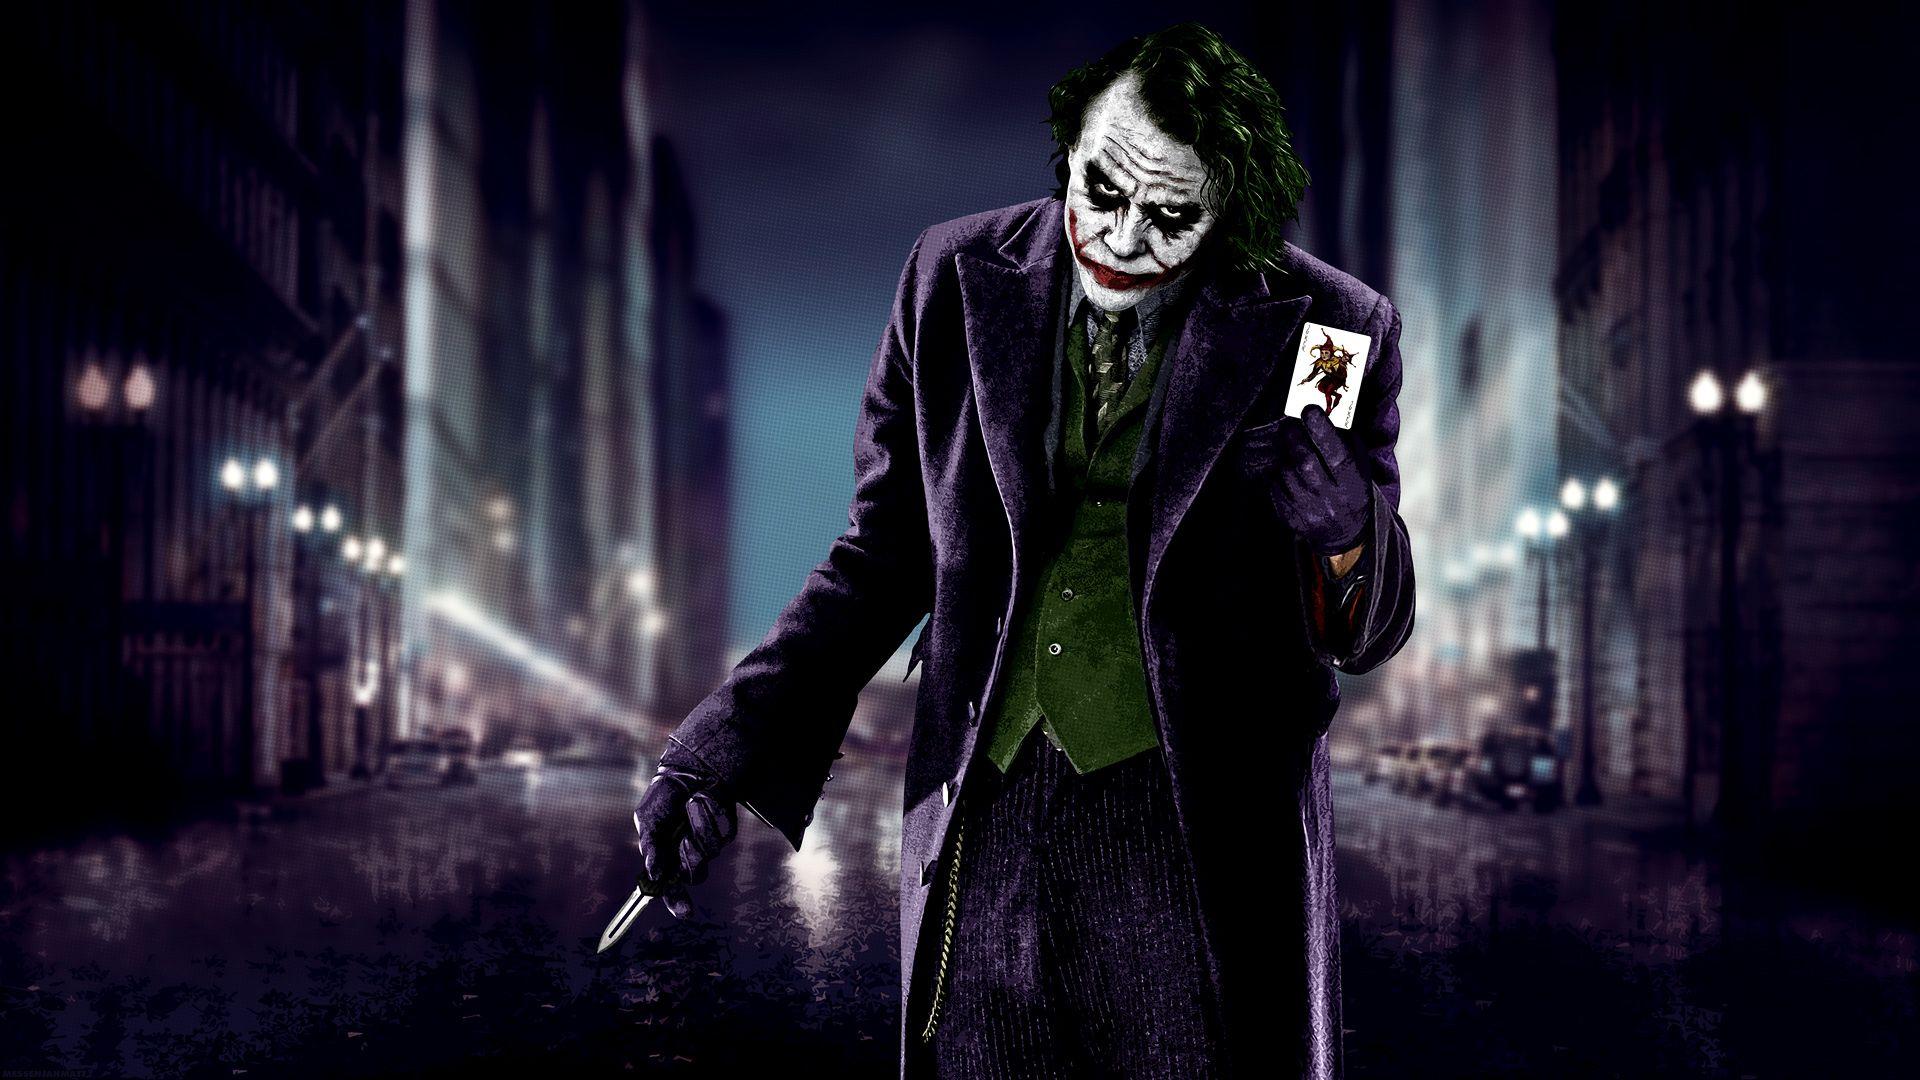 Wallpaper face, smile, batman, Joker, Batman, the dark knight, joker, Dark  knight images for desktop, section фильмы - download